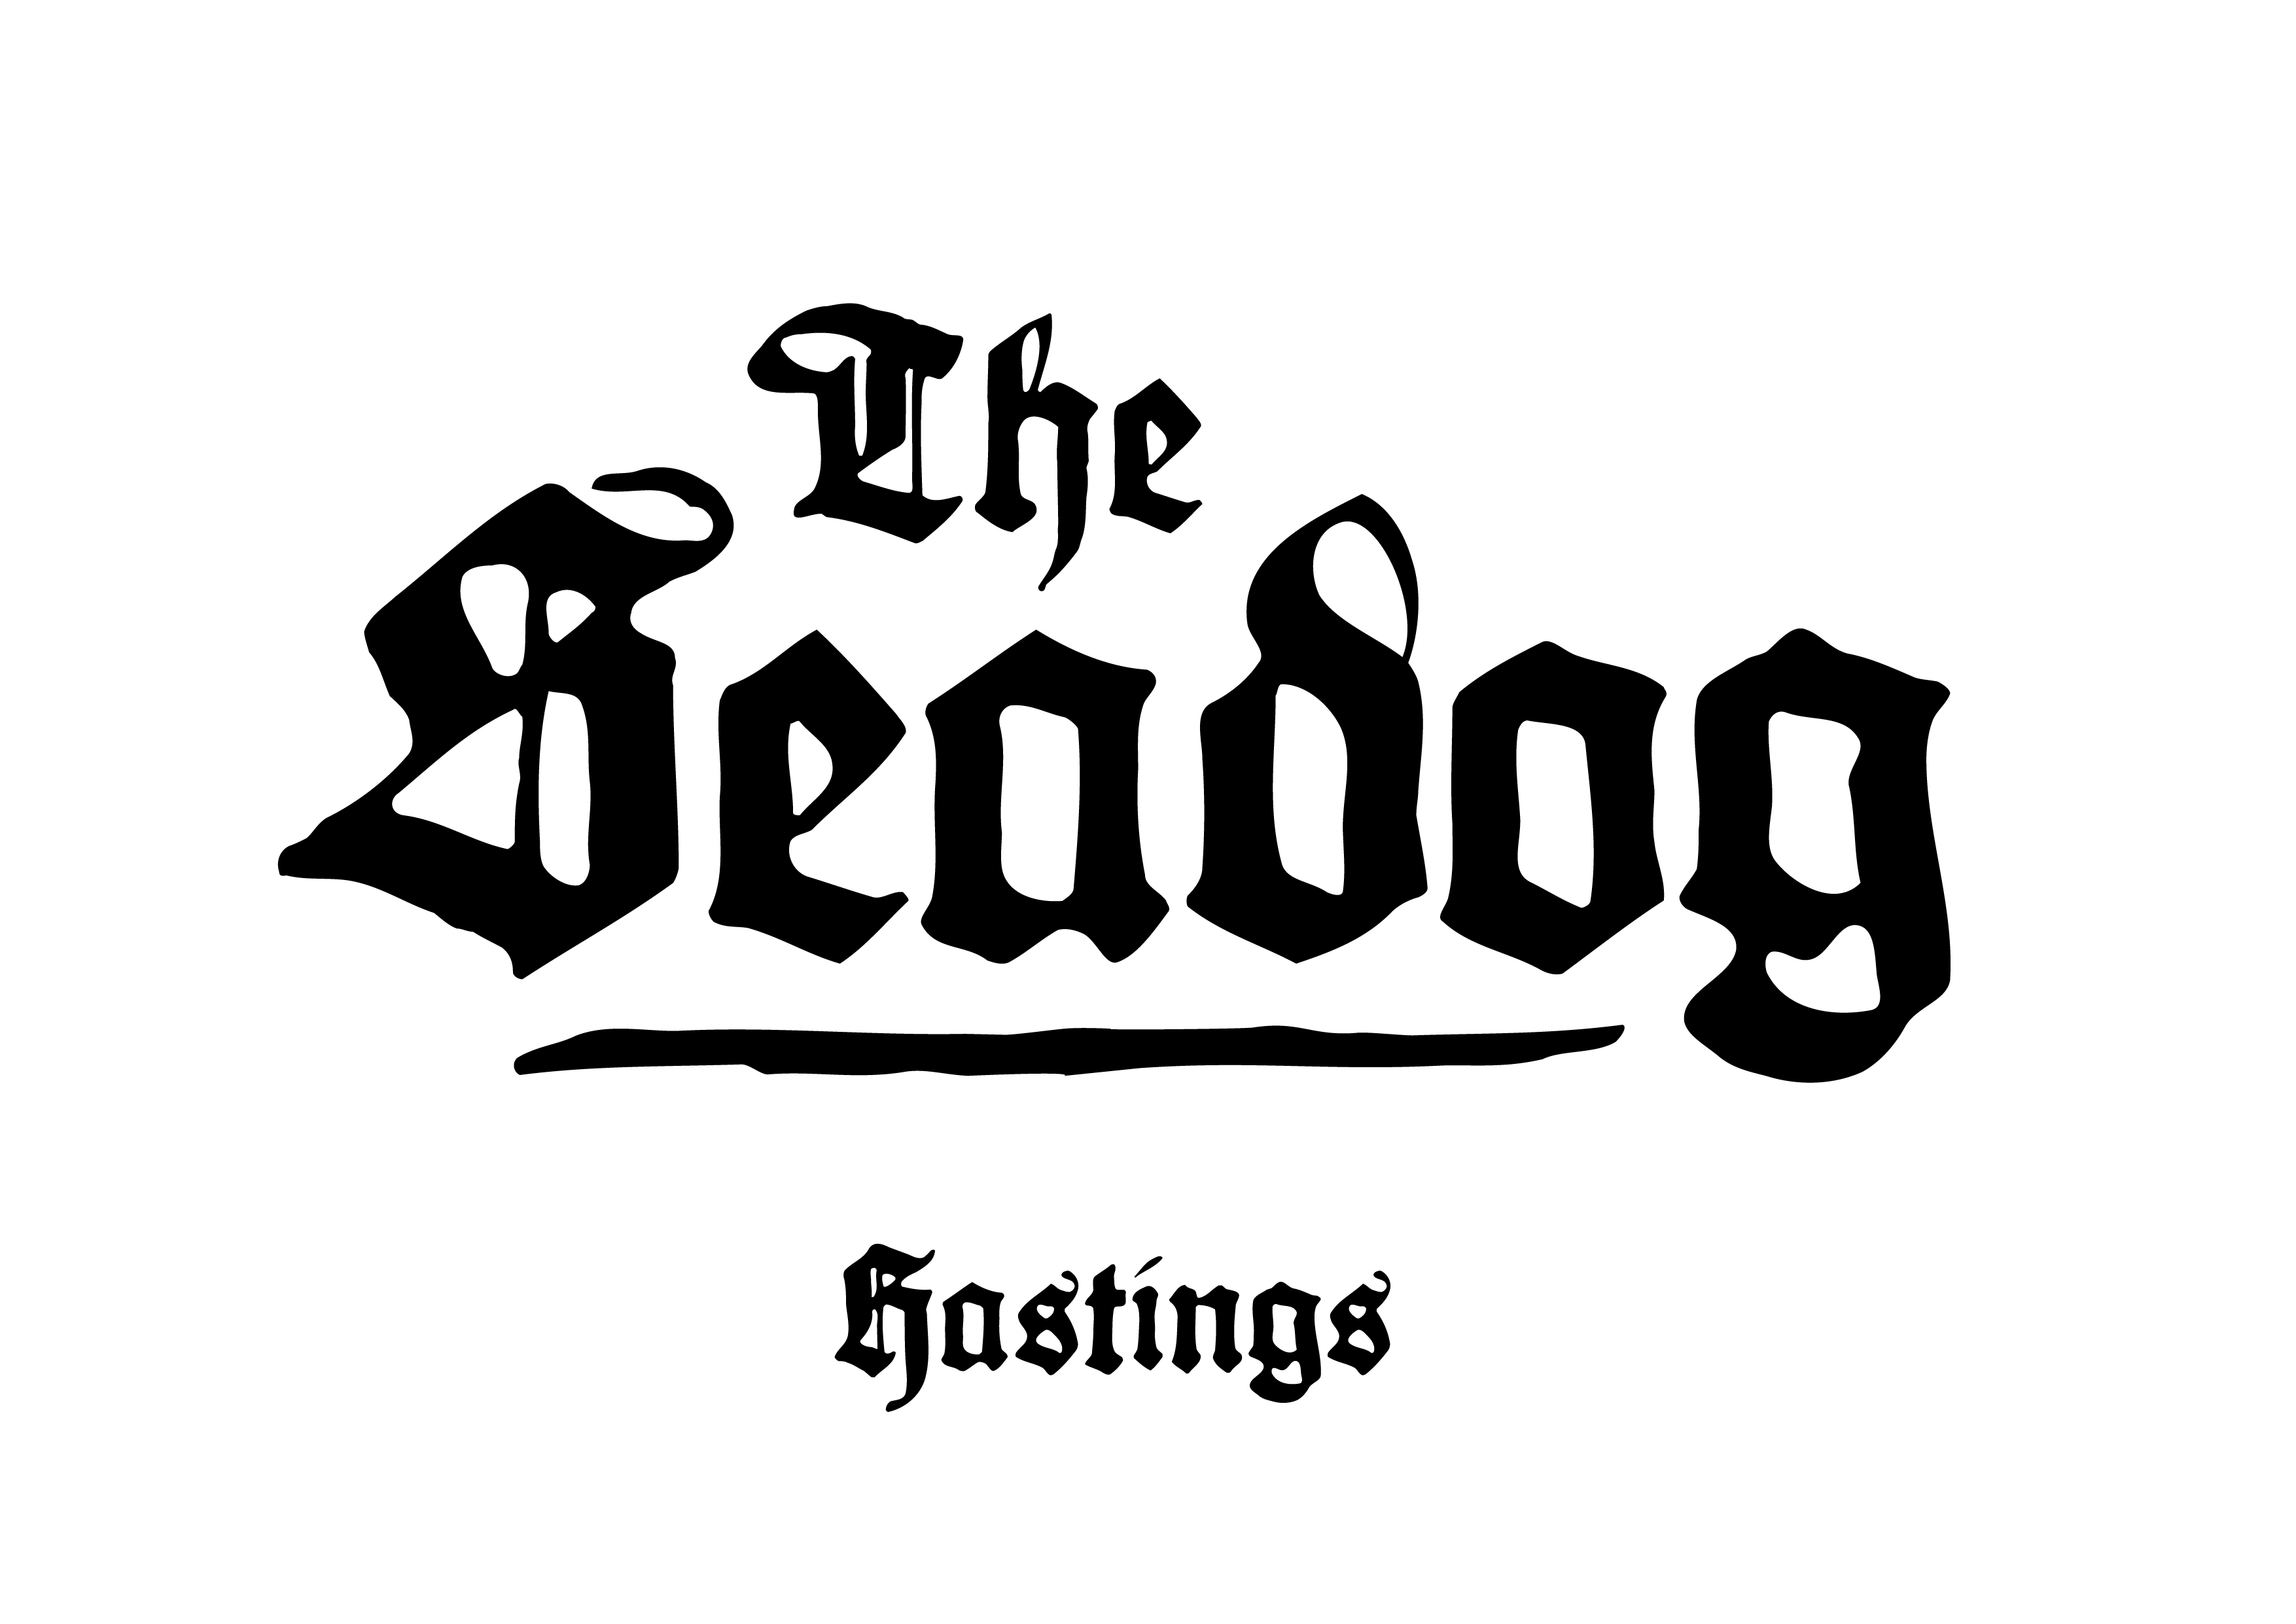 logo for The Seadog